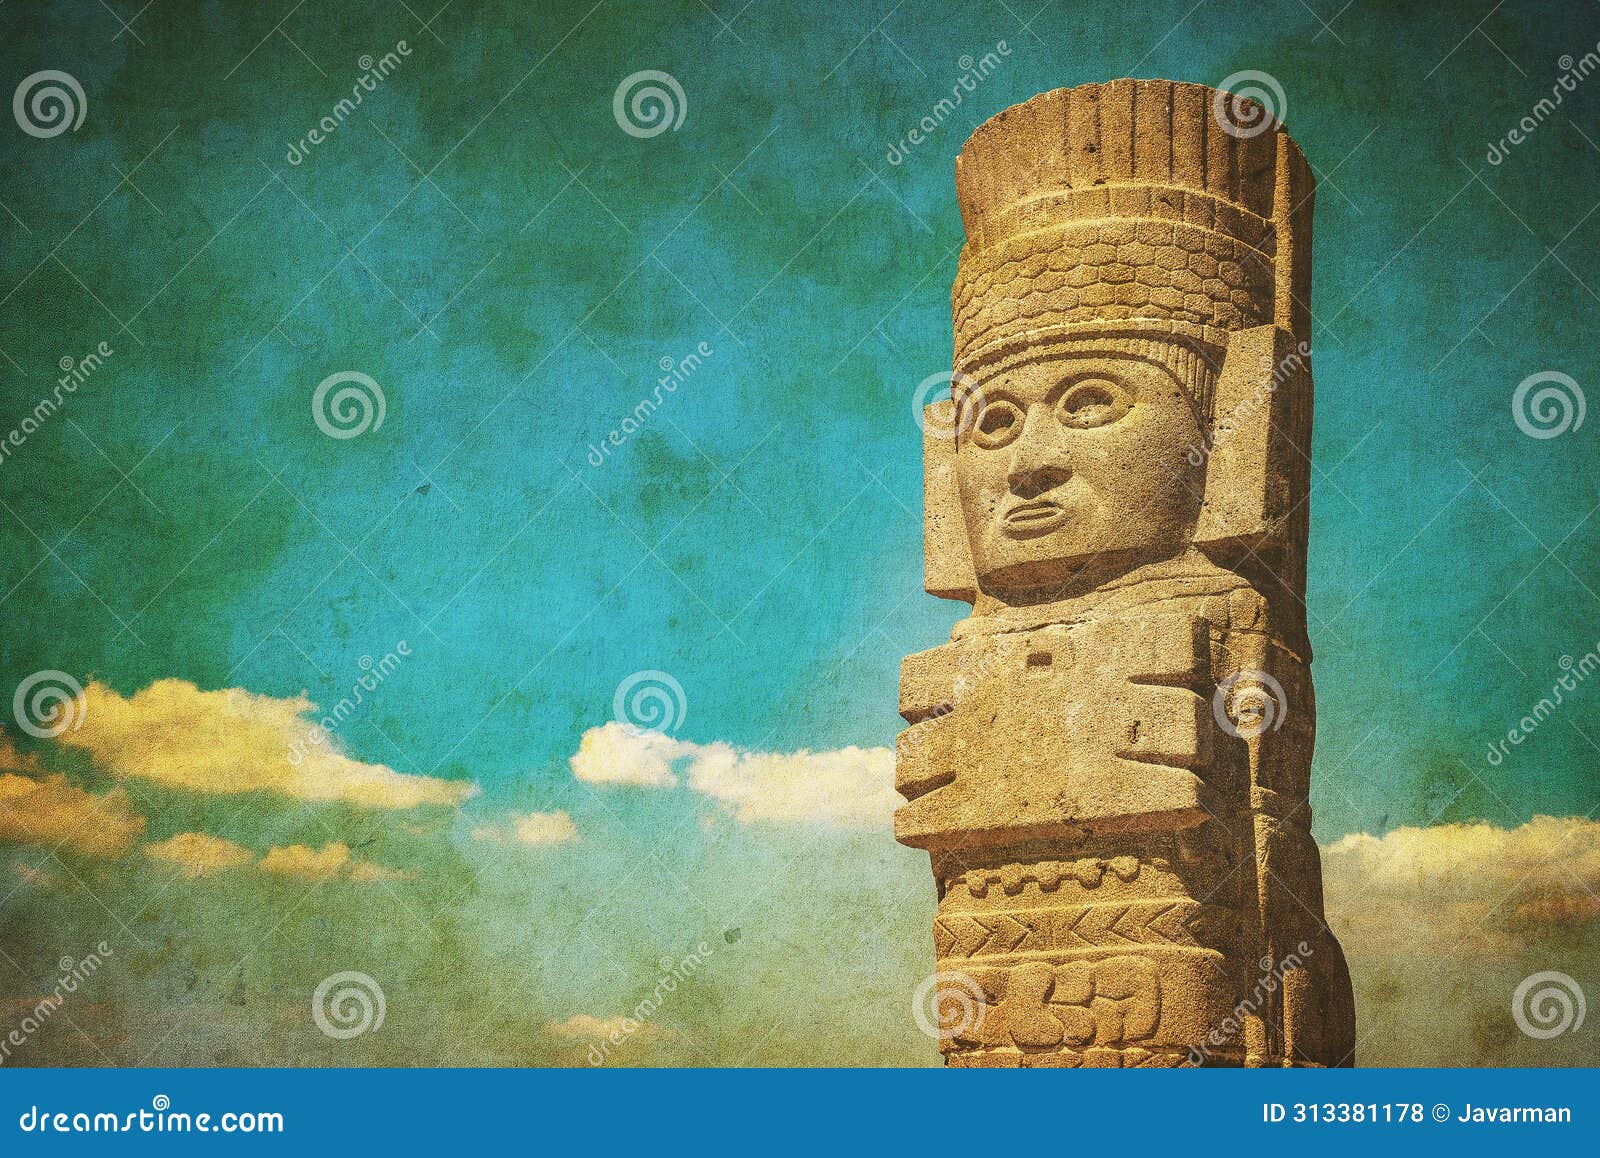 vintage image of toltec warriors or atlantes columns at pyramid of quetzalcoatl in tula, mexico